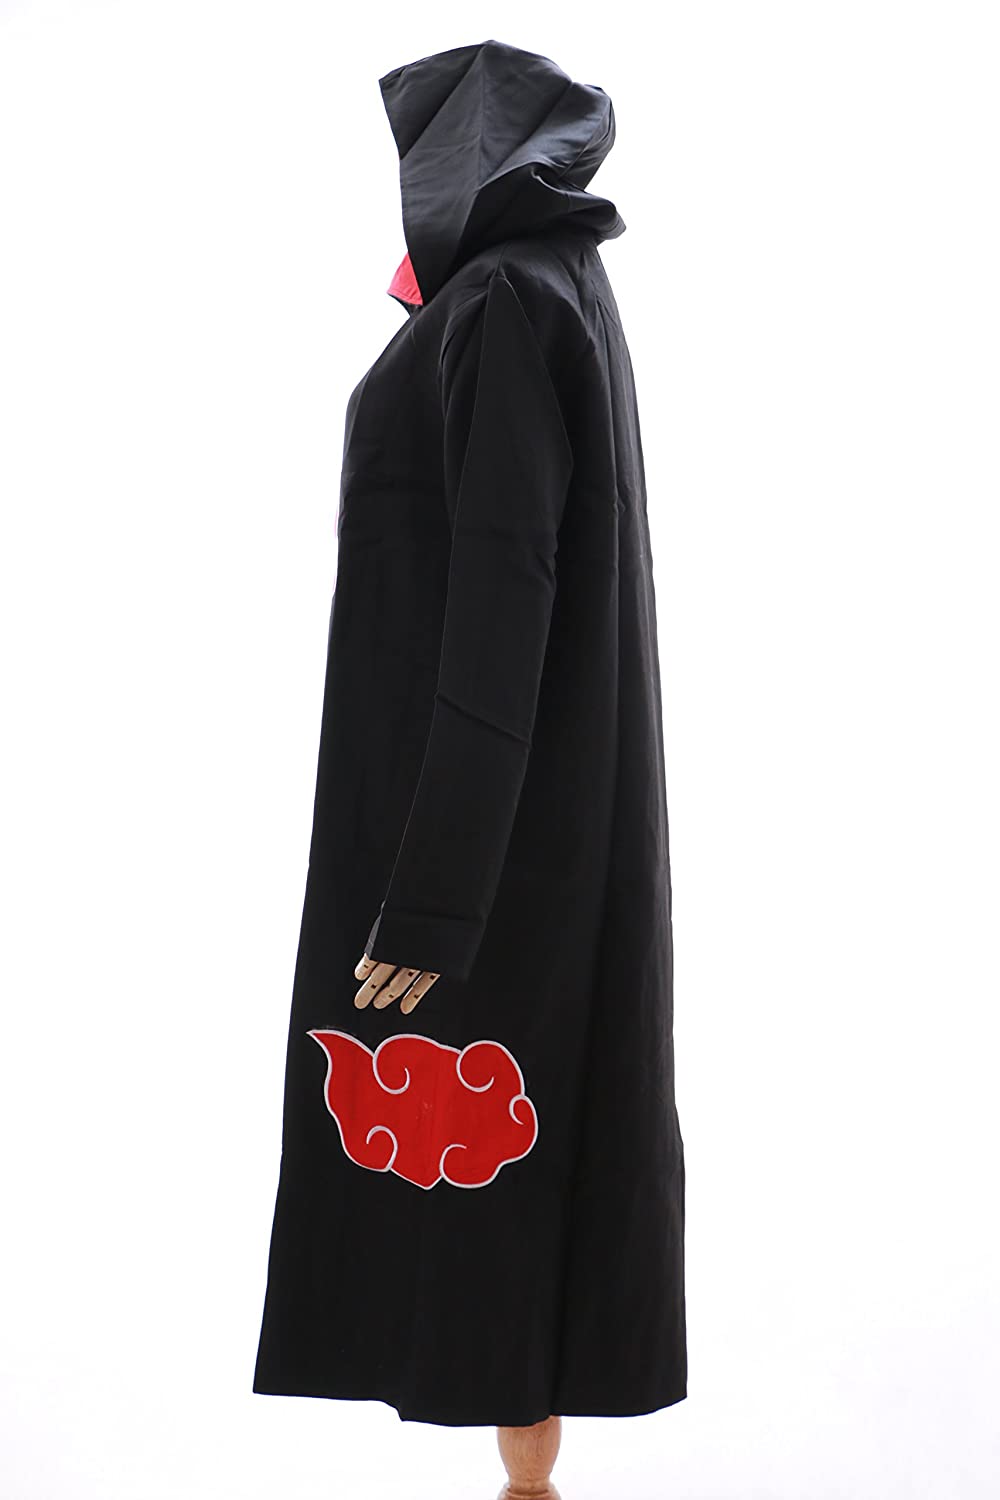 N-02 Akatsuki Naruto Sasuke Team Taka Cloak Cape Hooded Coat Cosplay ...